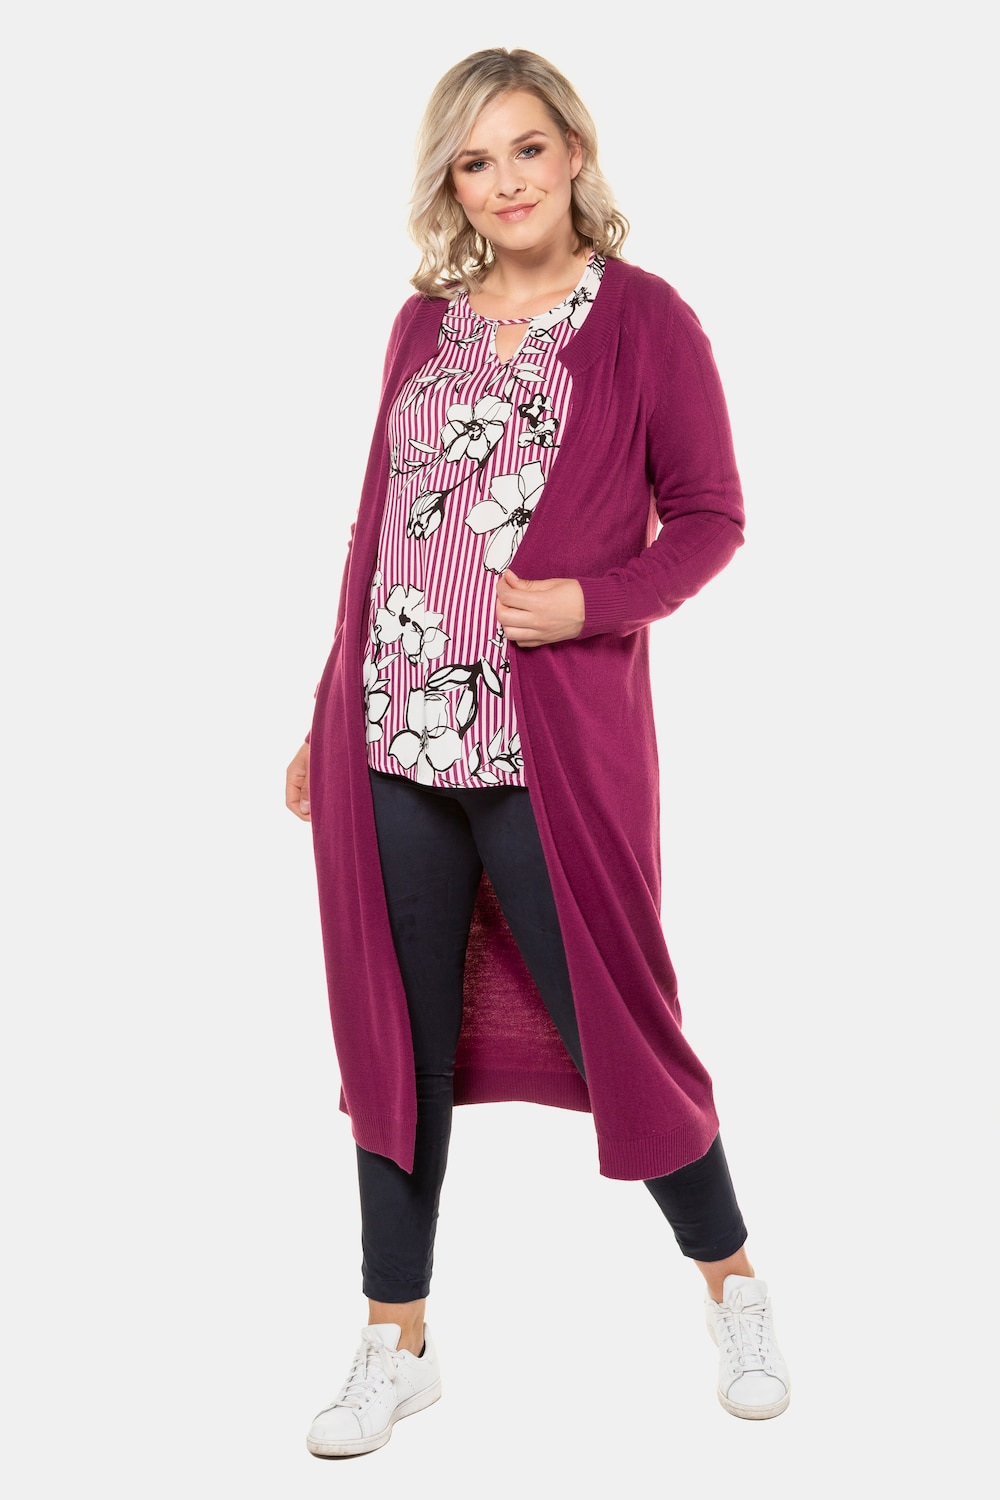 Plus Size Ajour Rib Knit Trim Round Neck Duster Length Sweater, Woman, purple, size: 20/22, synthetic fibers, Ulla Popken